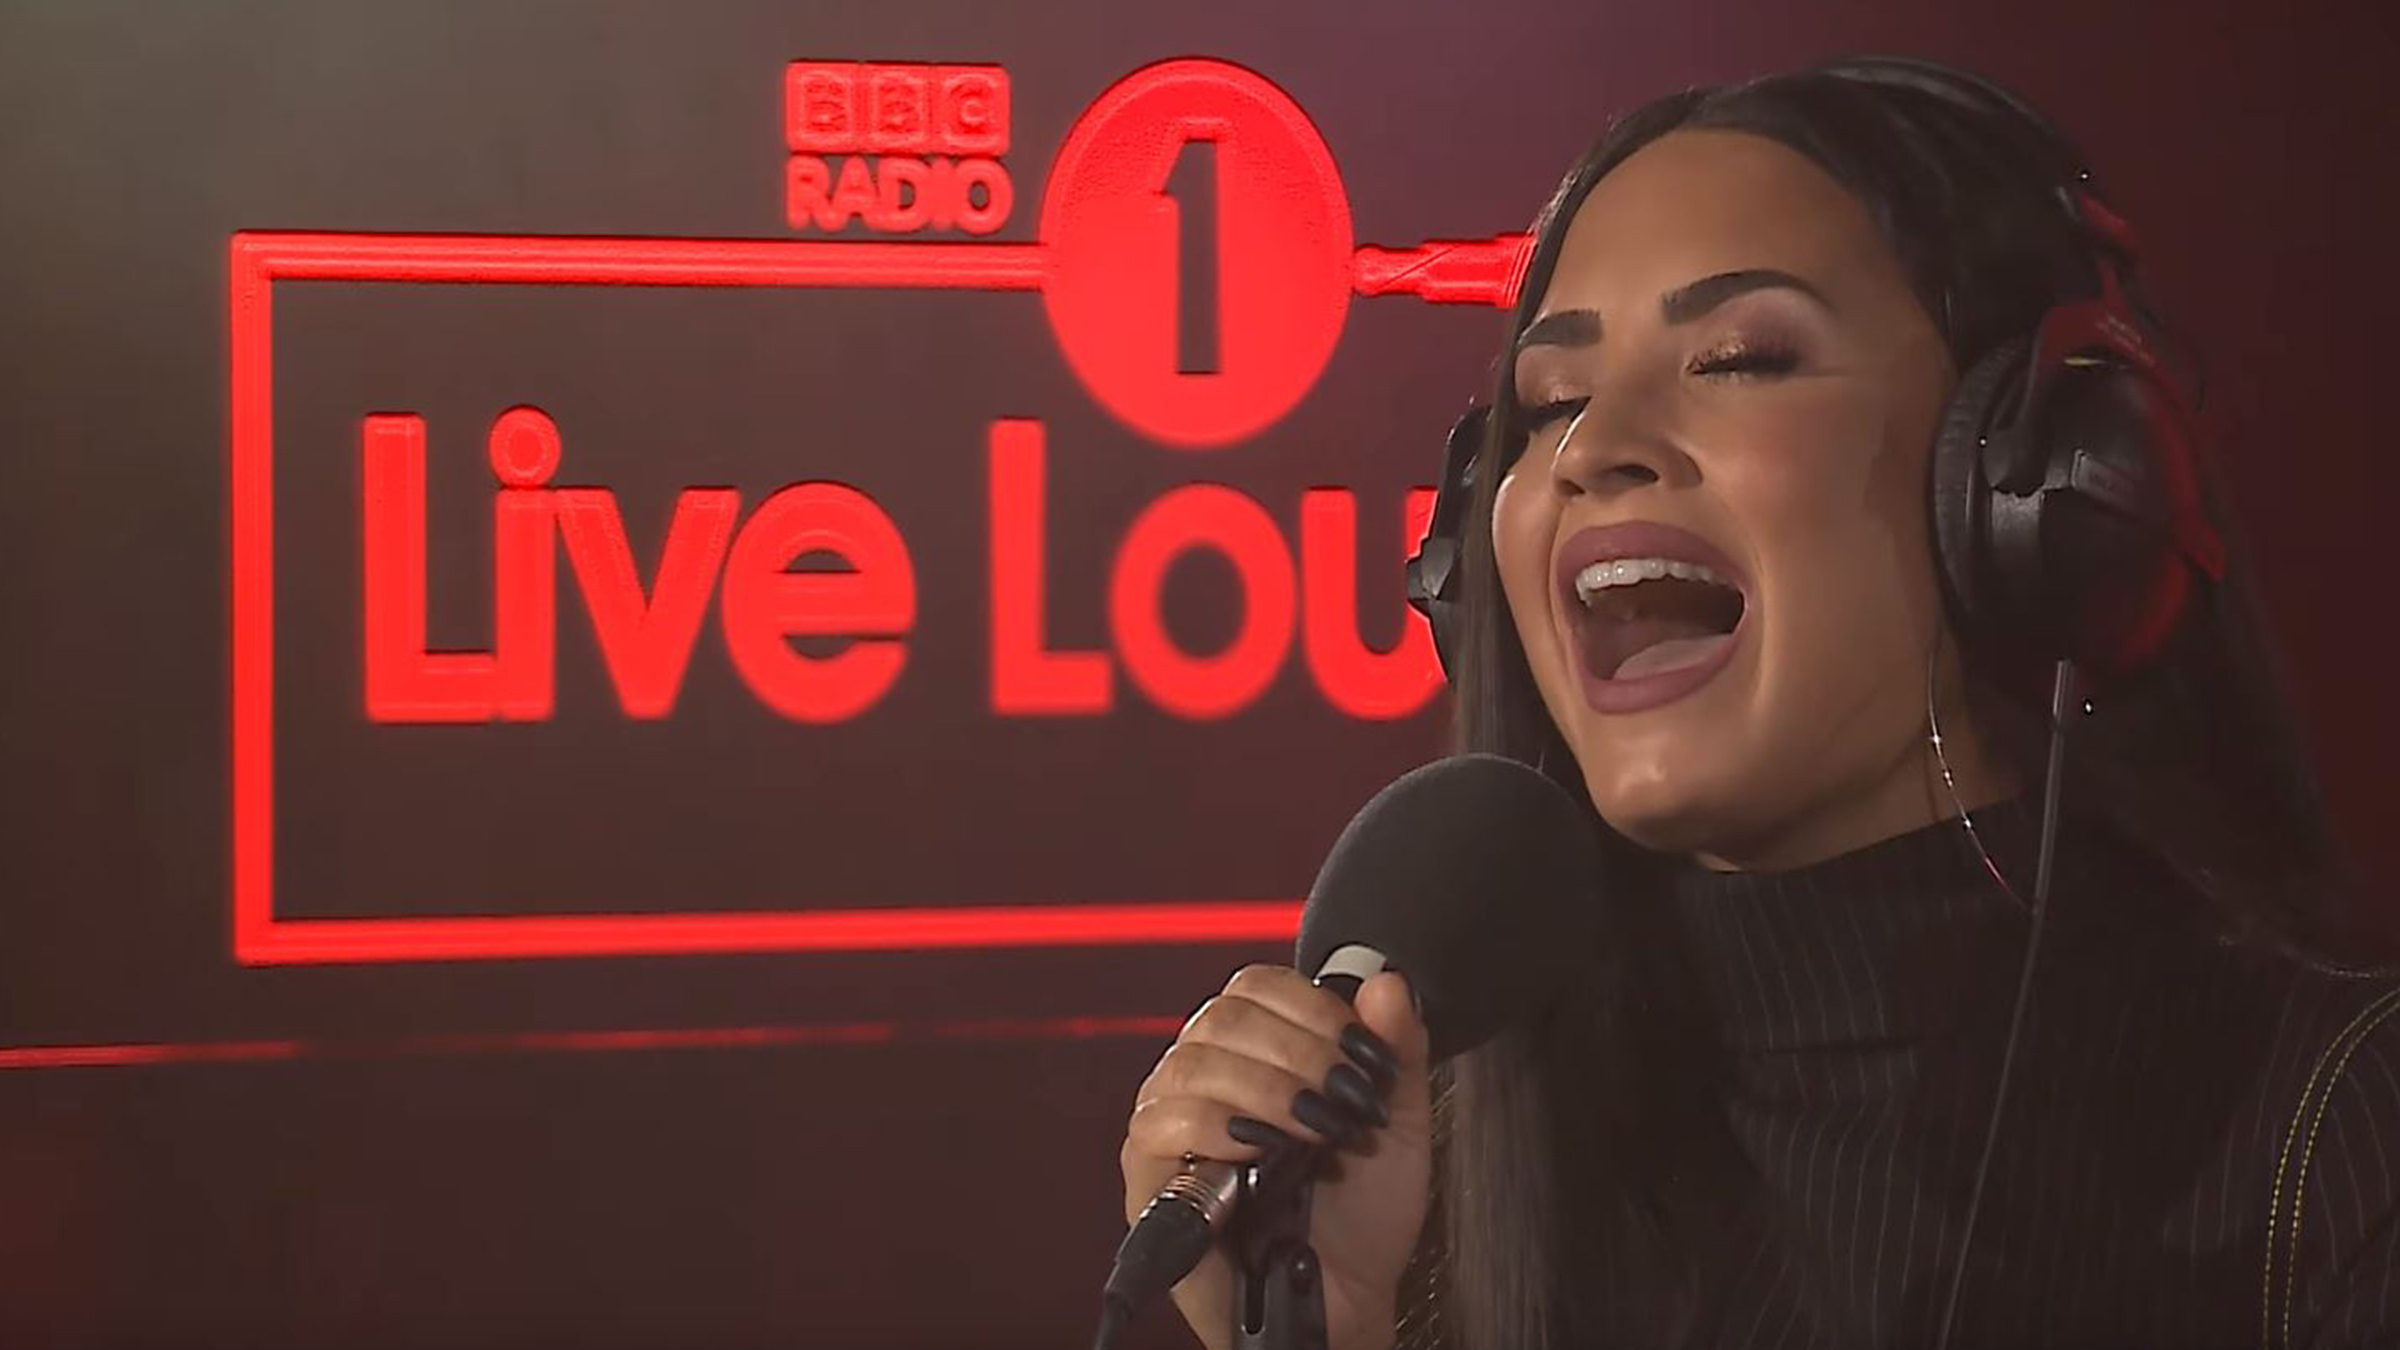 Gewaagd! Demi Lovato covert 'Too Good At Goodbyes' bij BBC Radio 1! - Qmusic2400 x 1350